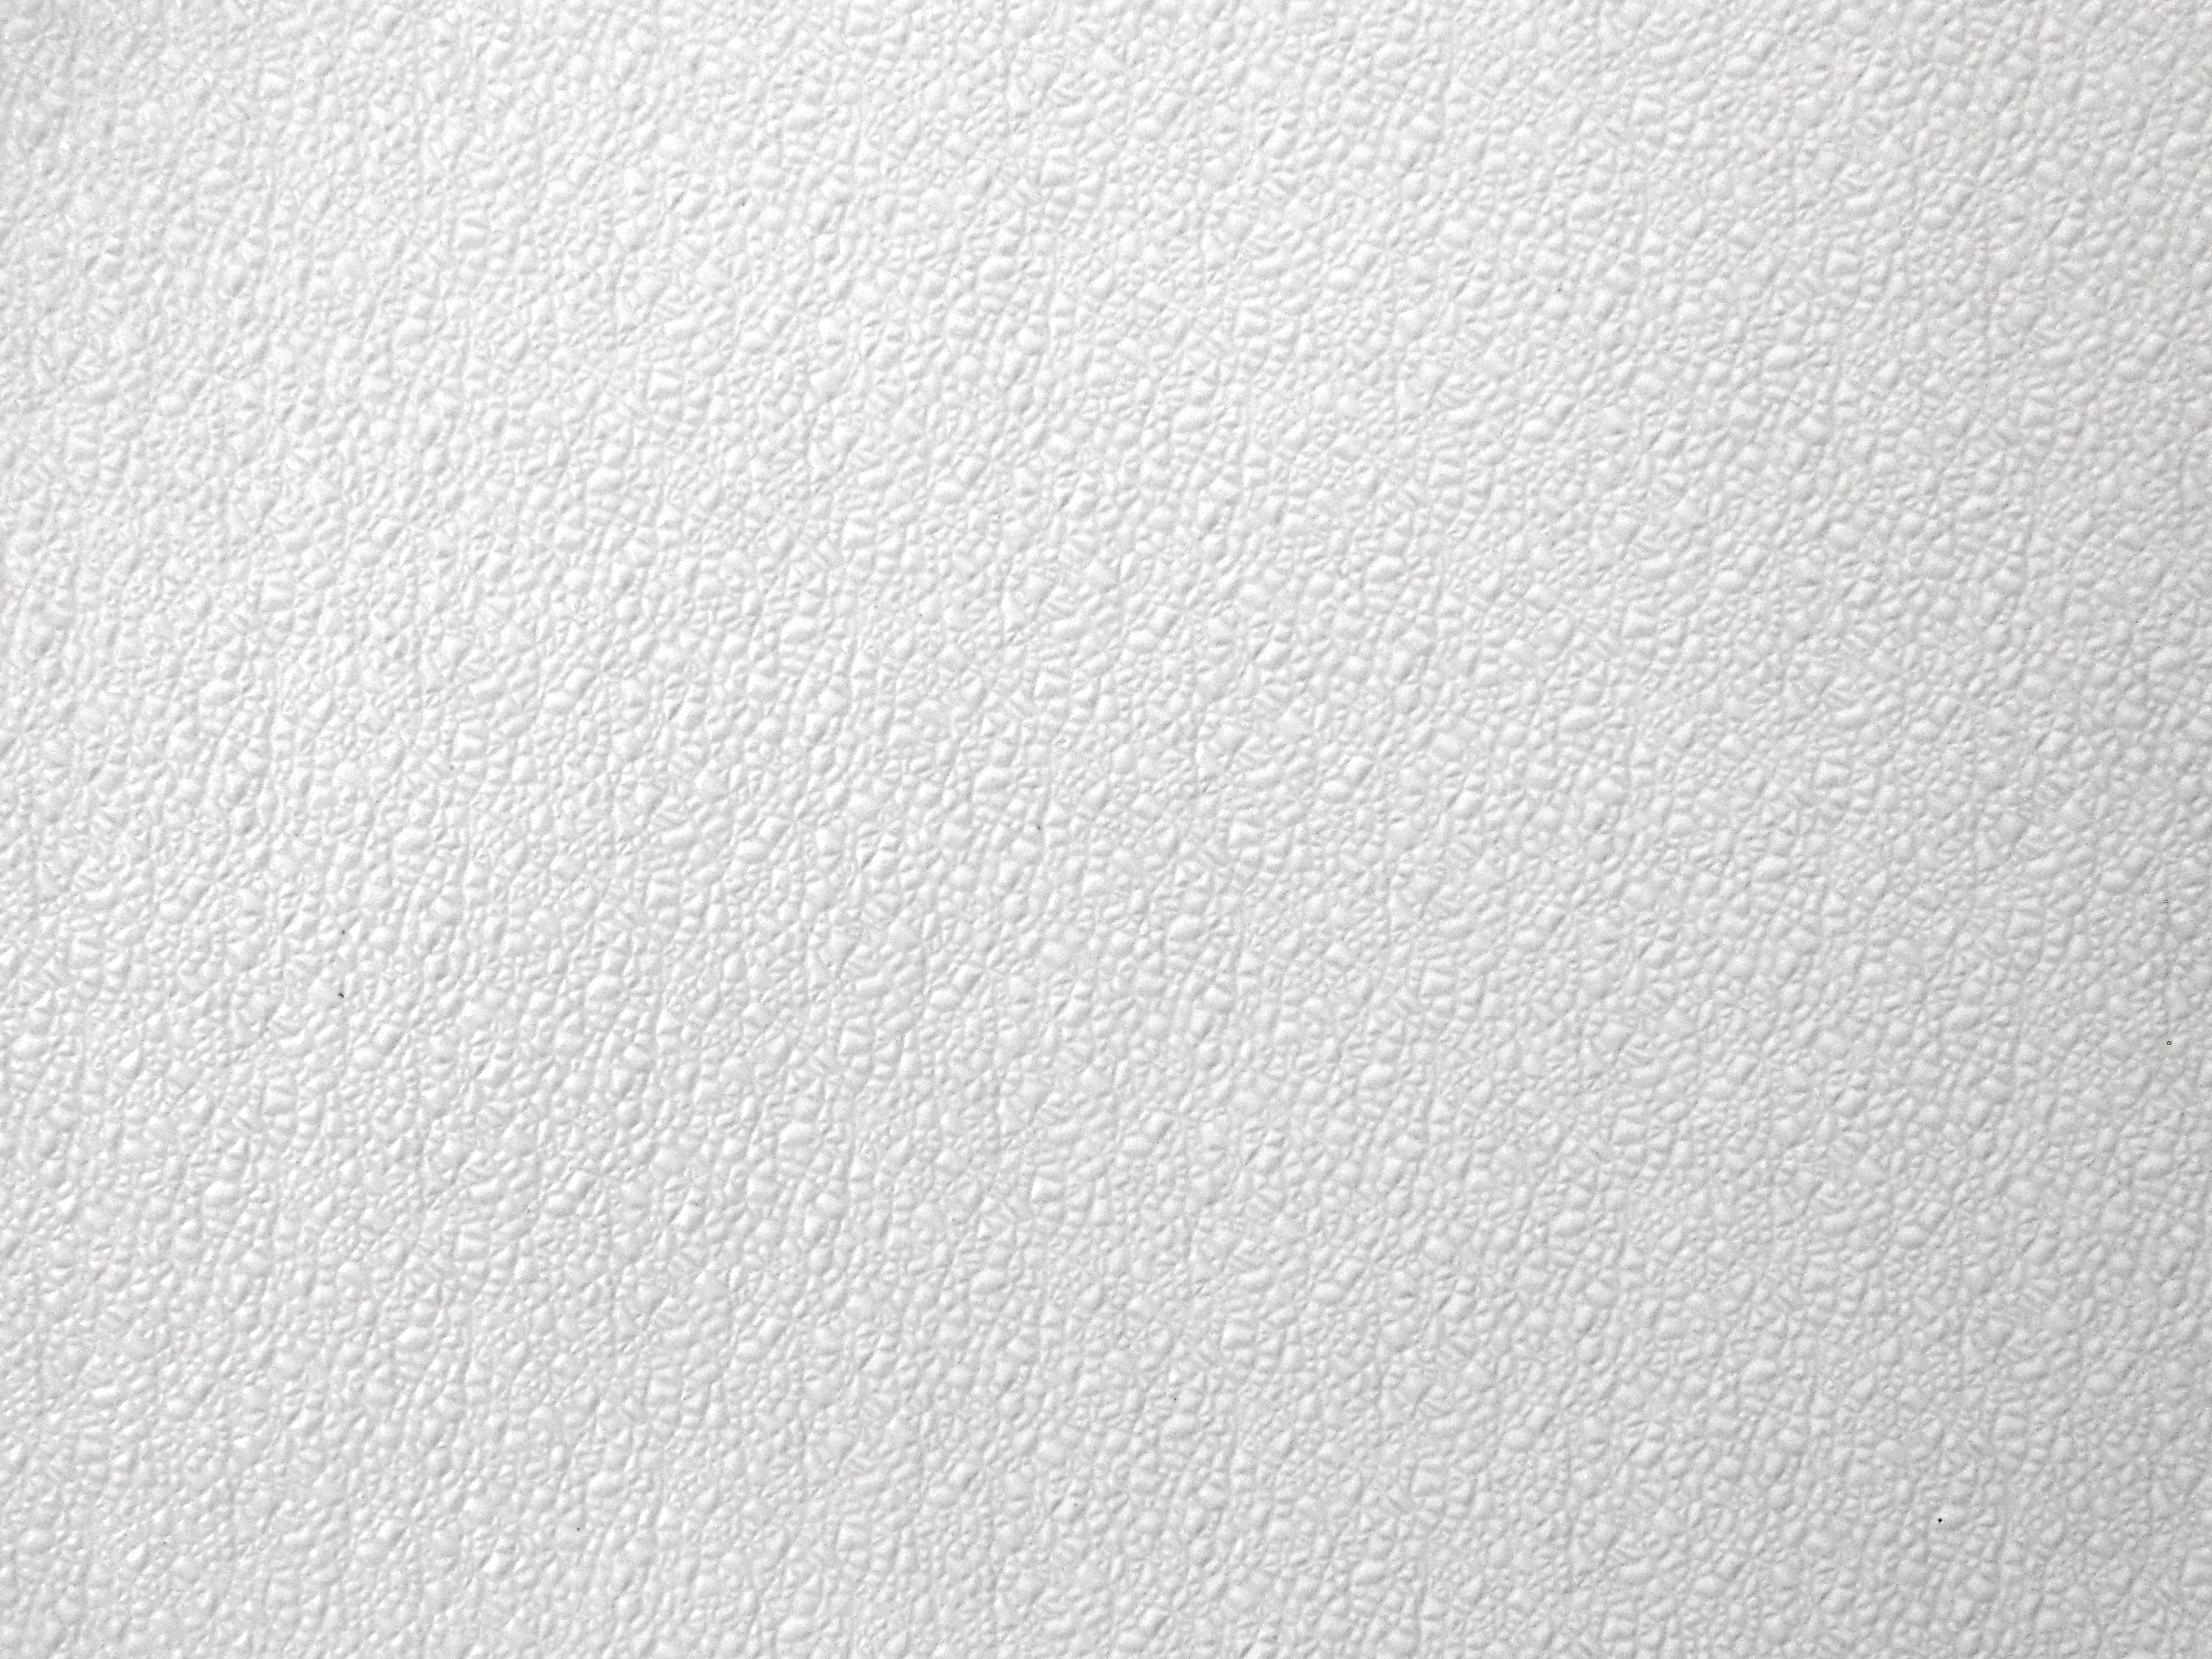 Bumpy White Plastic Texture Picture | Free Photograph | Photos ...